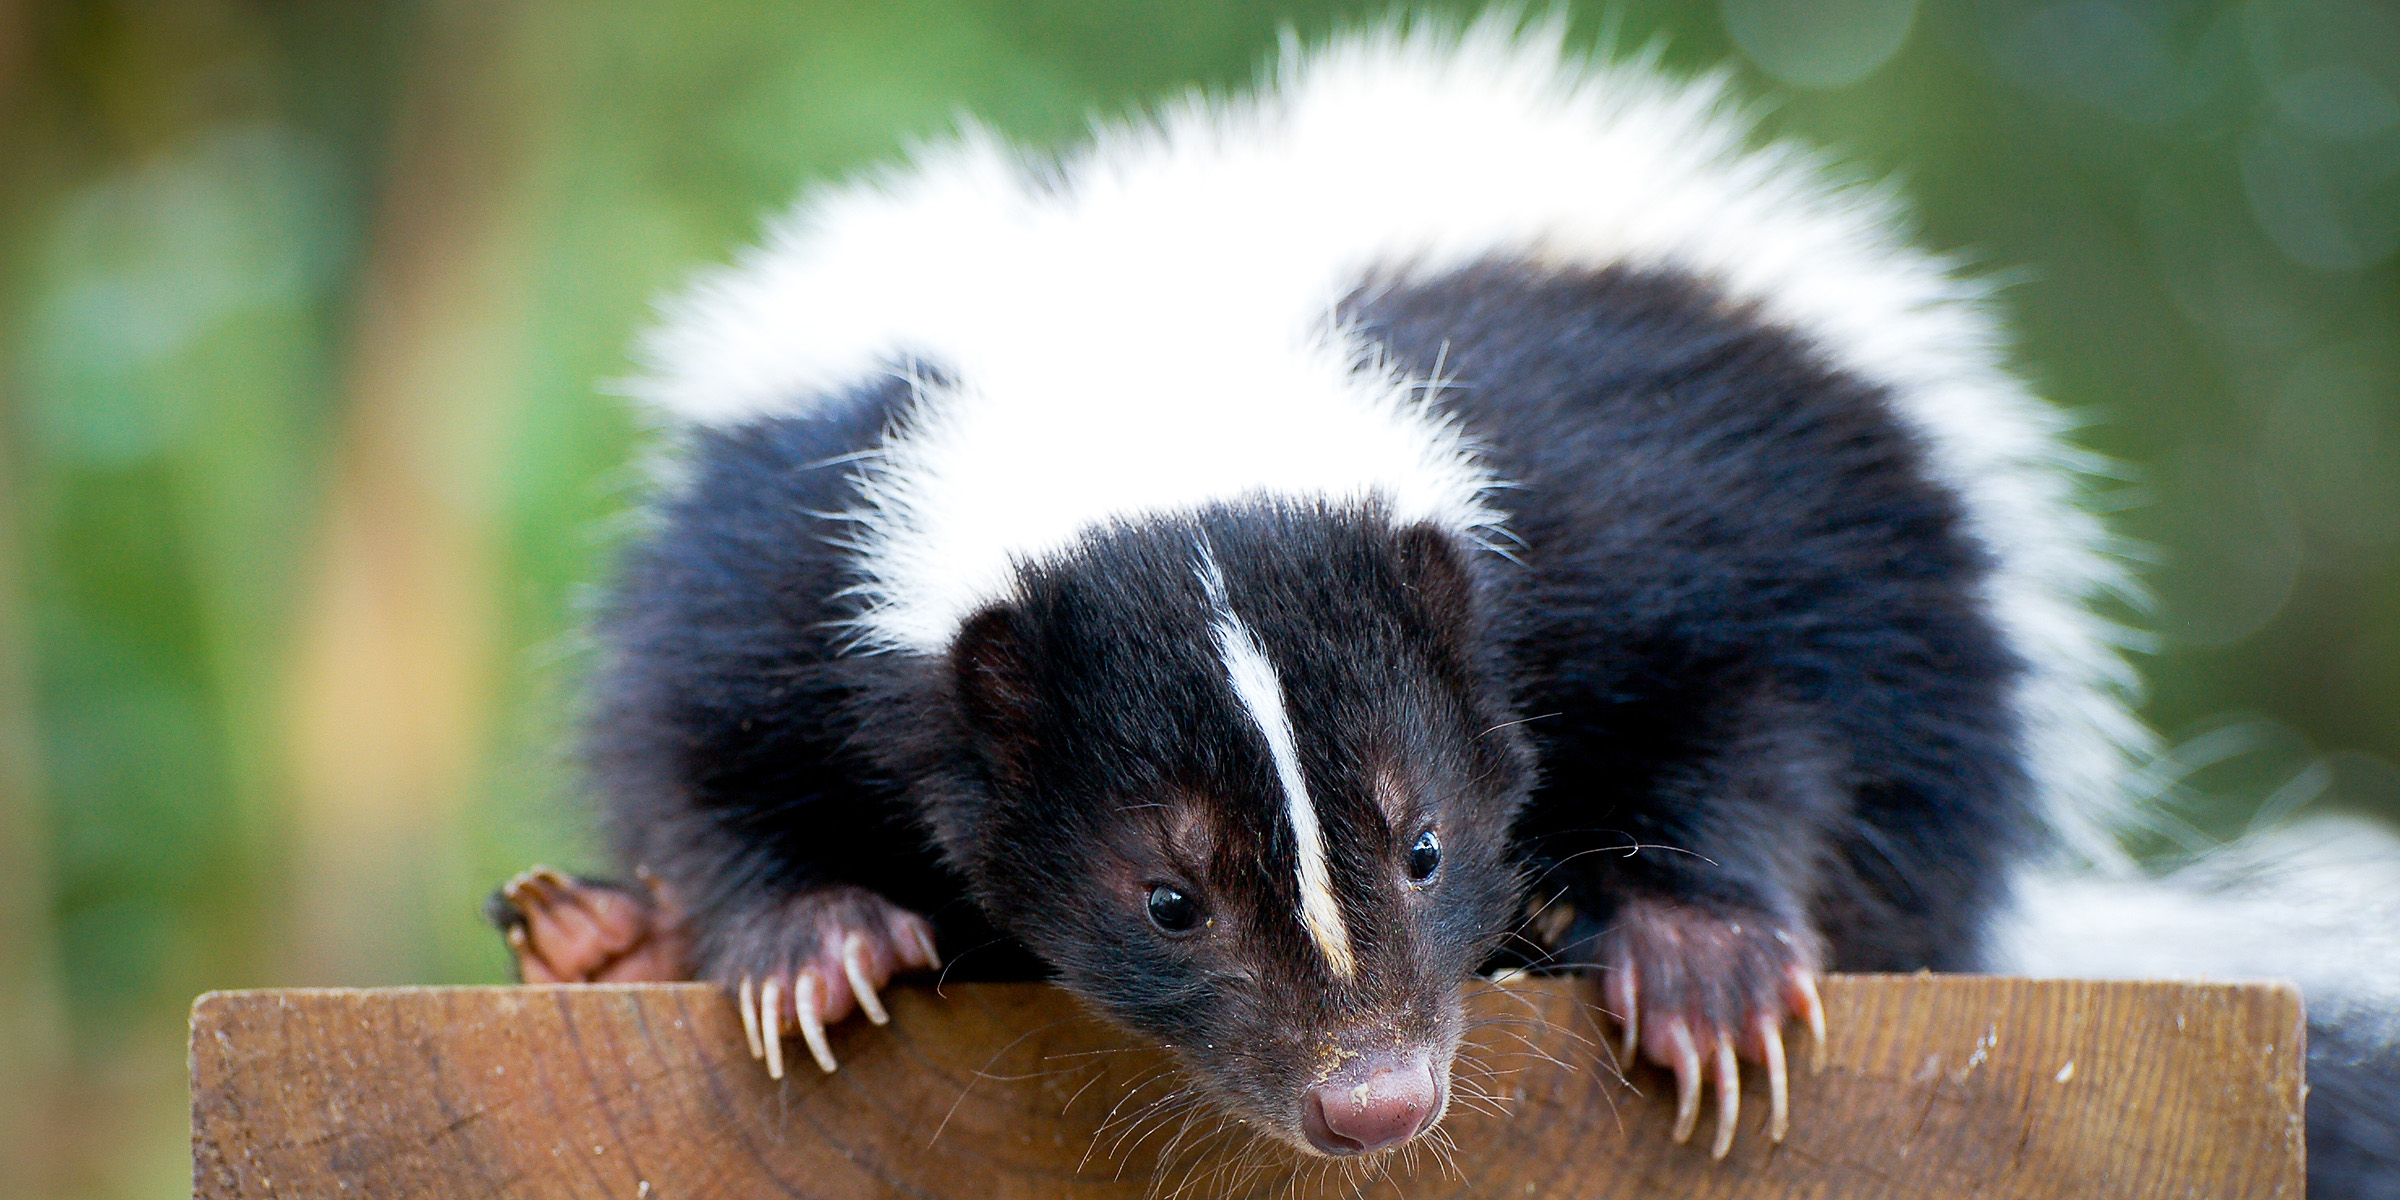 A close up shot of a skunk | Source: Shutterstock